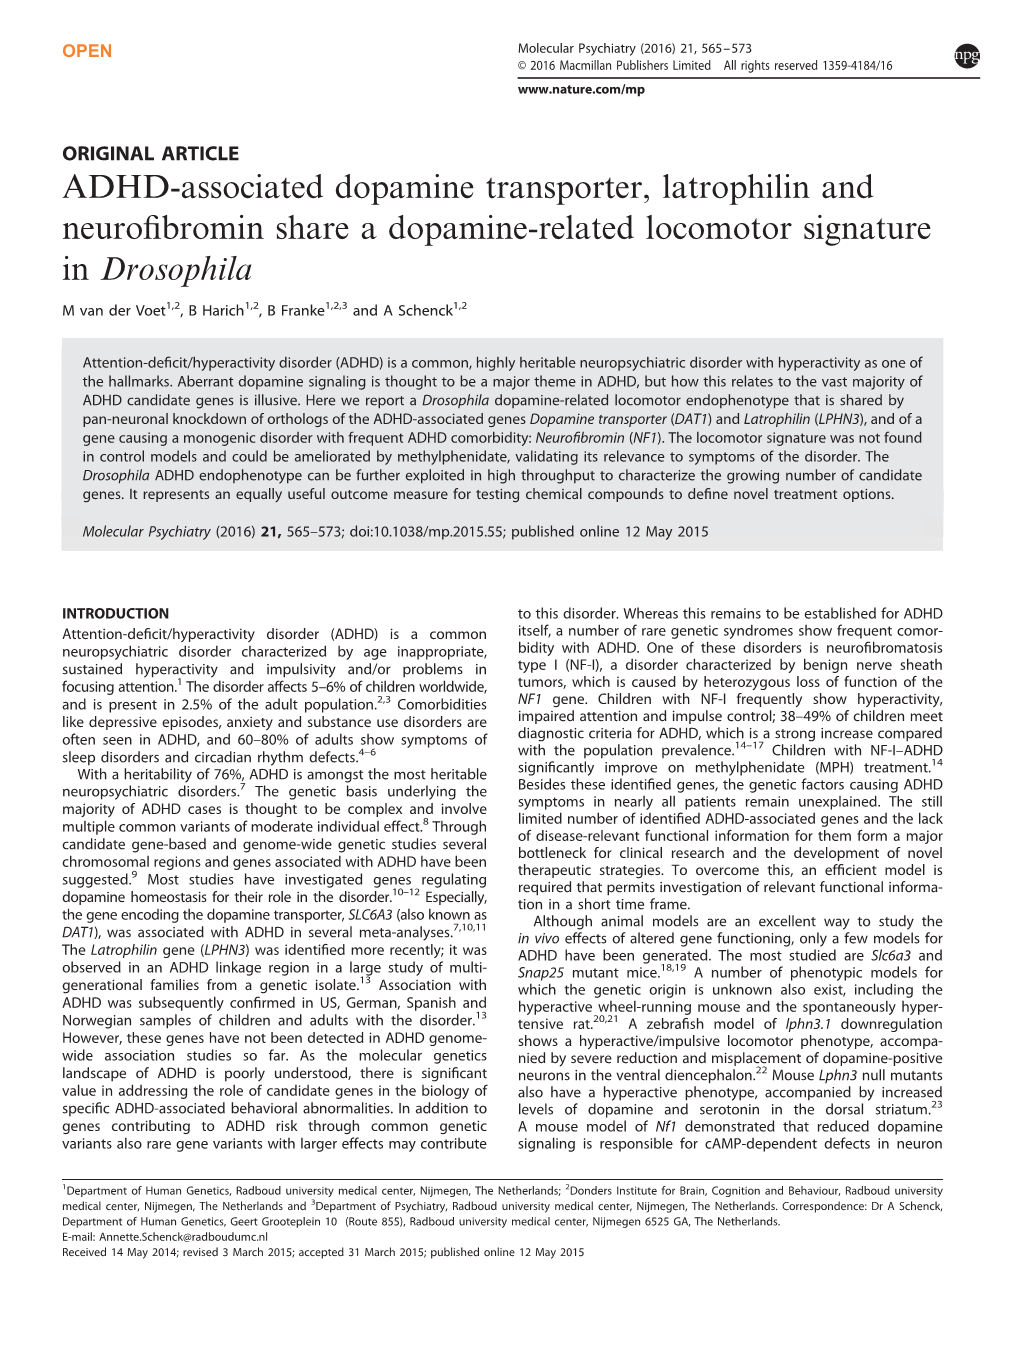 ADHD-Associated Dopamine Transporter, Latrophilin and Neuroﬁbromin Share a Dopamine-Related Locomotor Signature in Drosophila